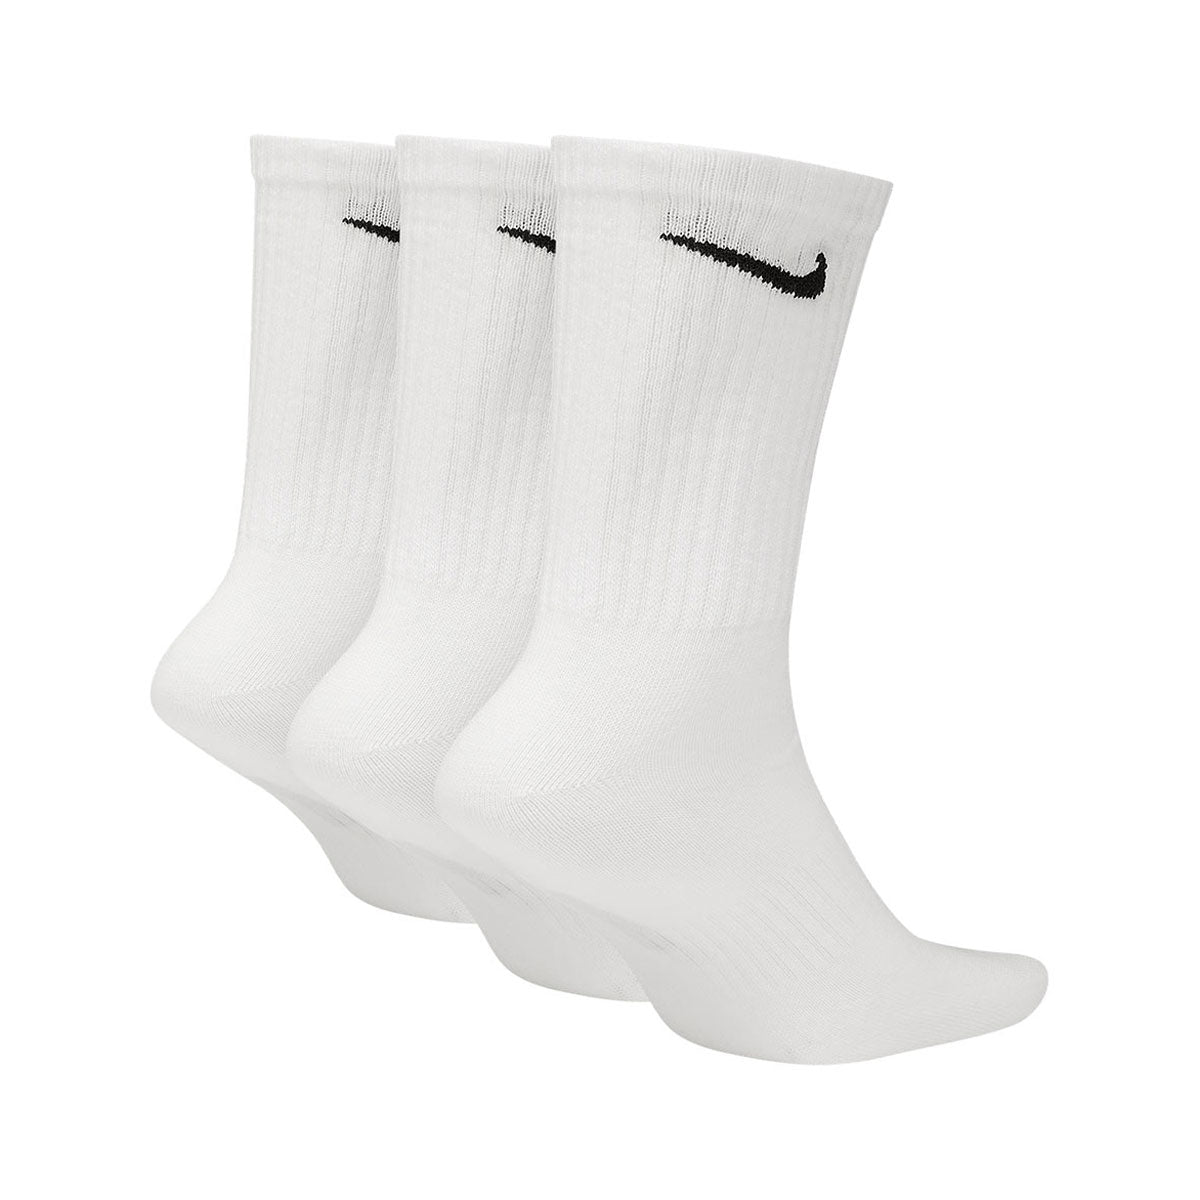 Nike Everyday Lightweight Training Socks 3 Pack